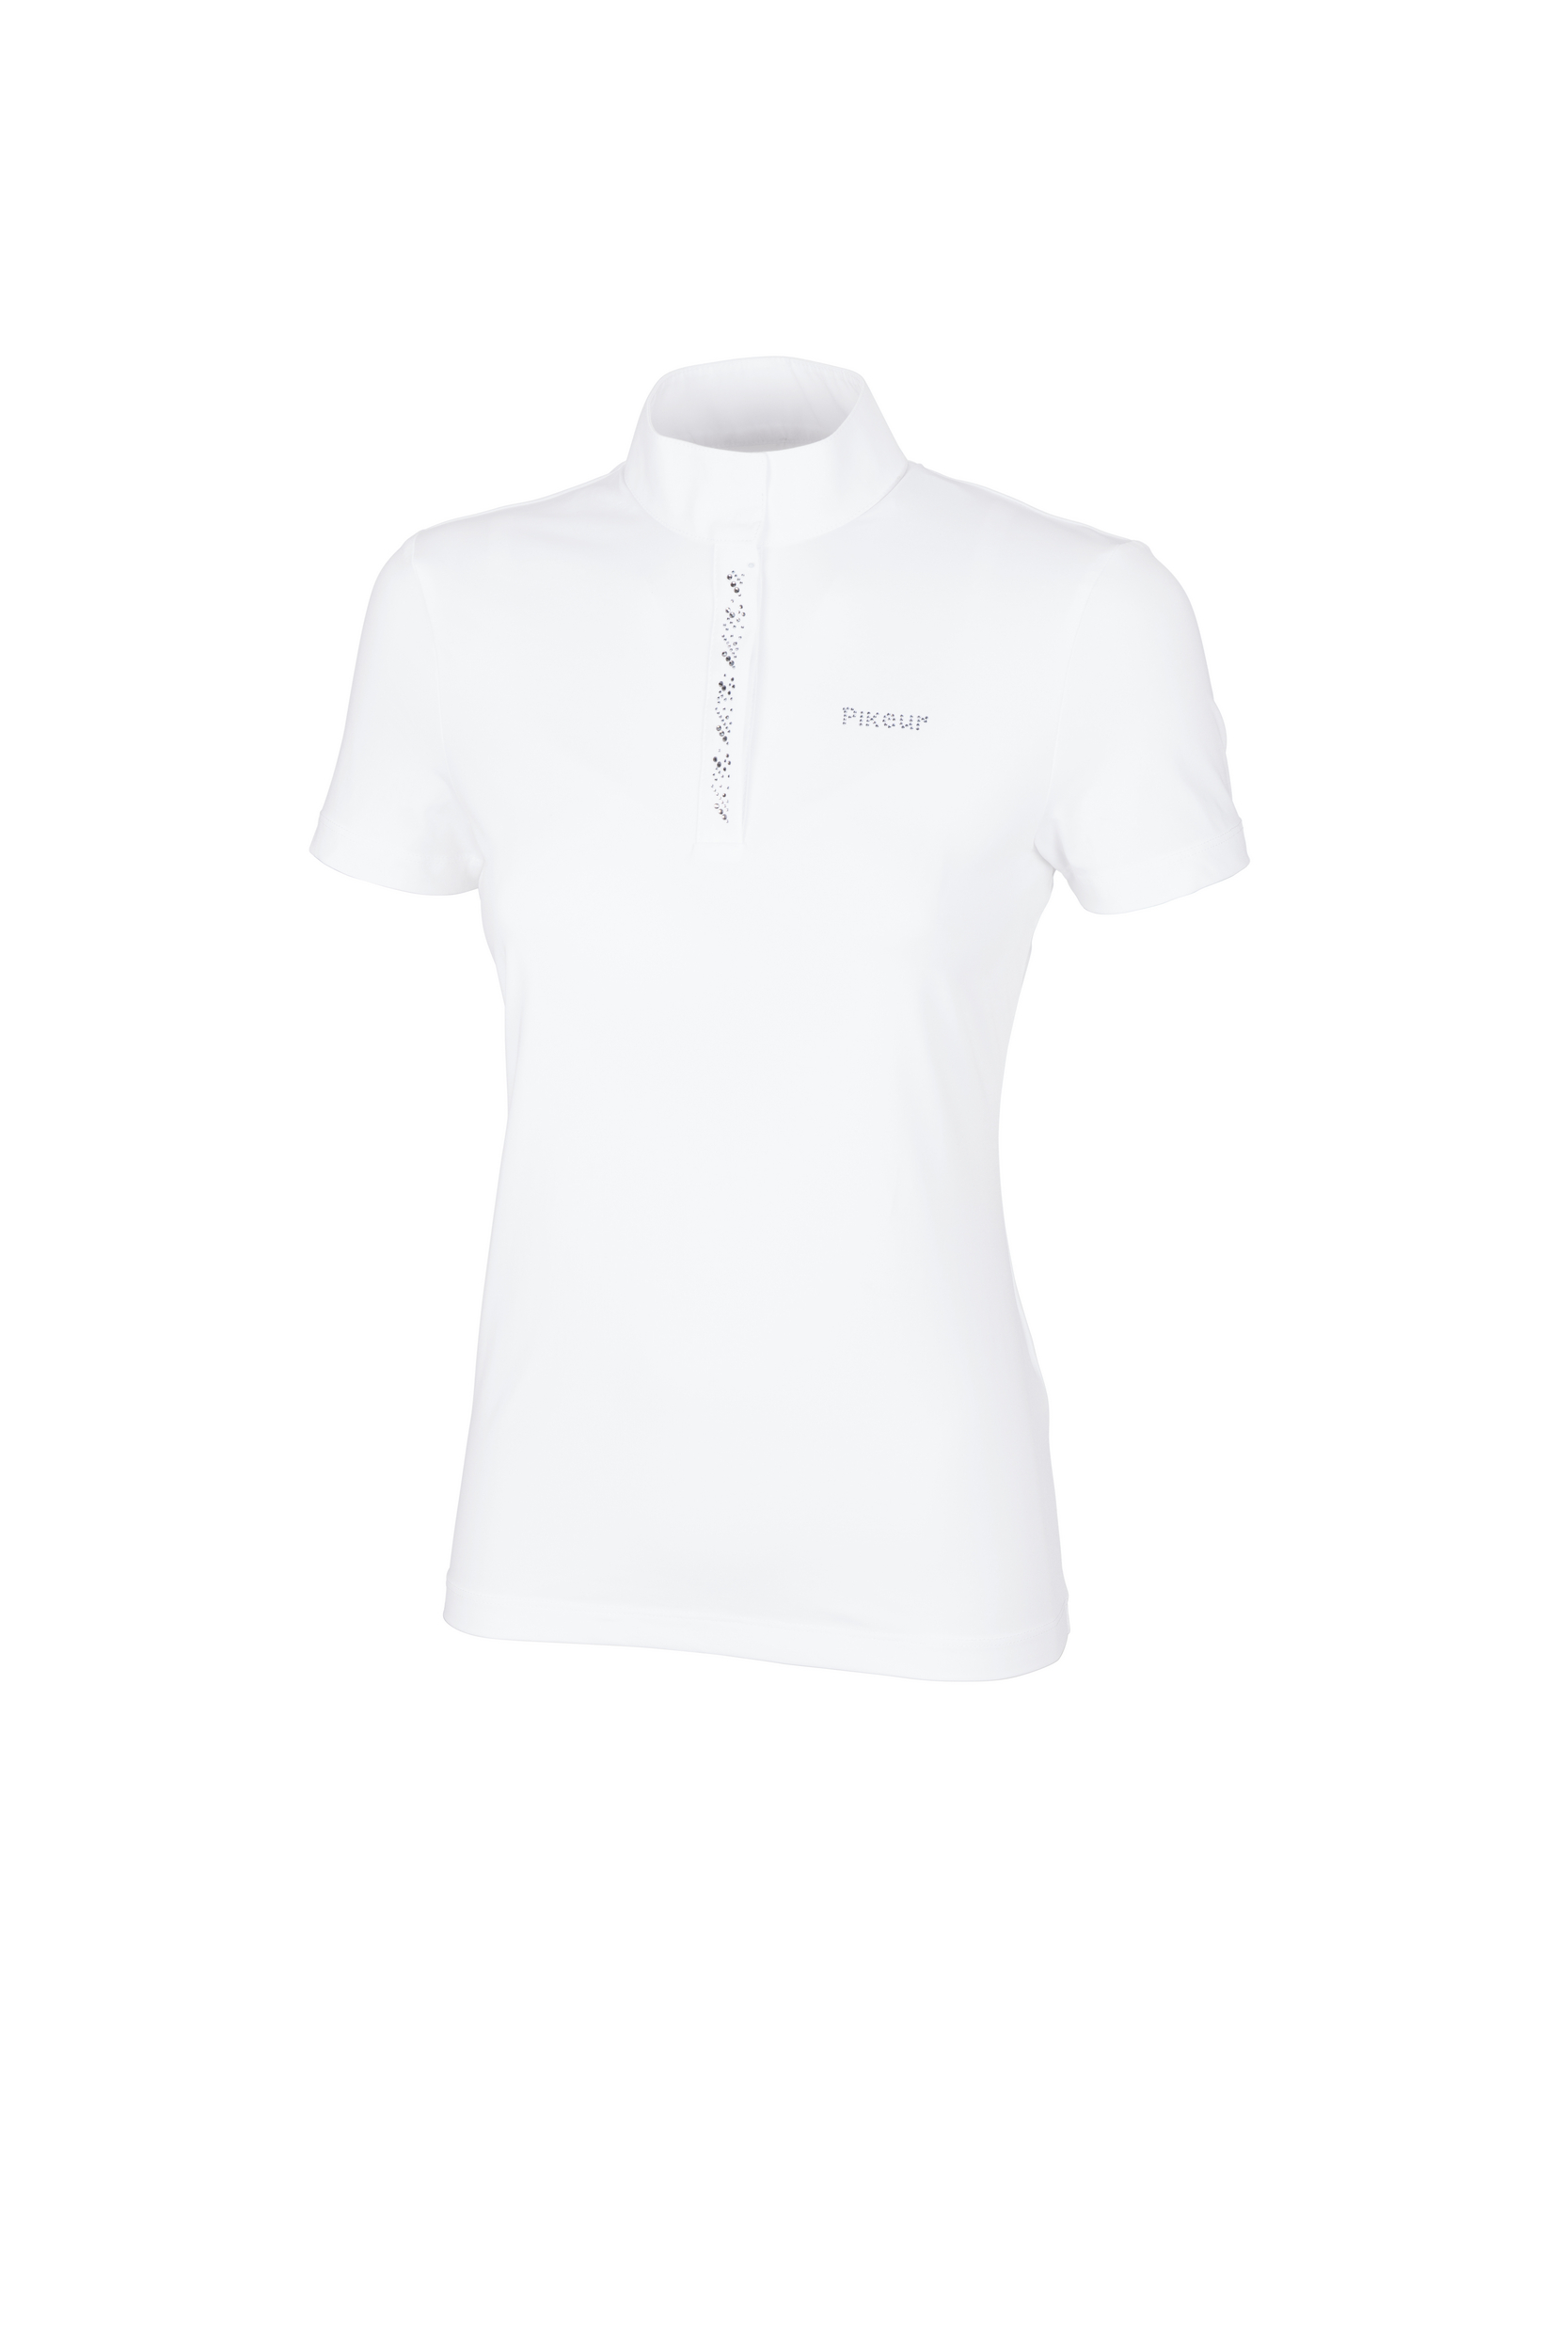 Pikeur Competition Shirt - Valkoinen (40)